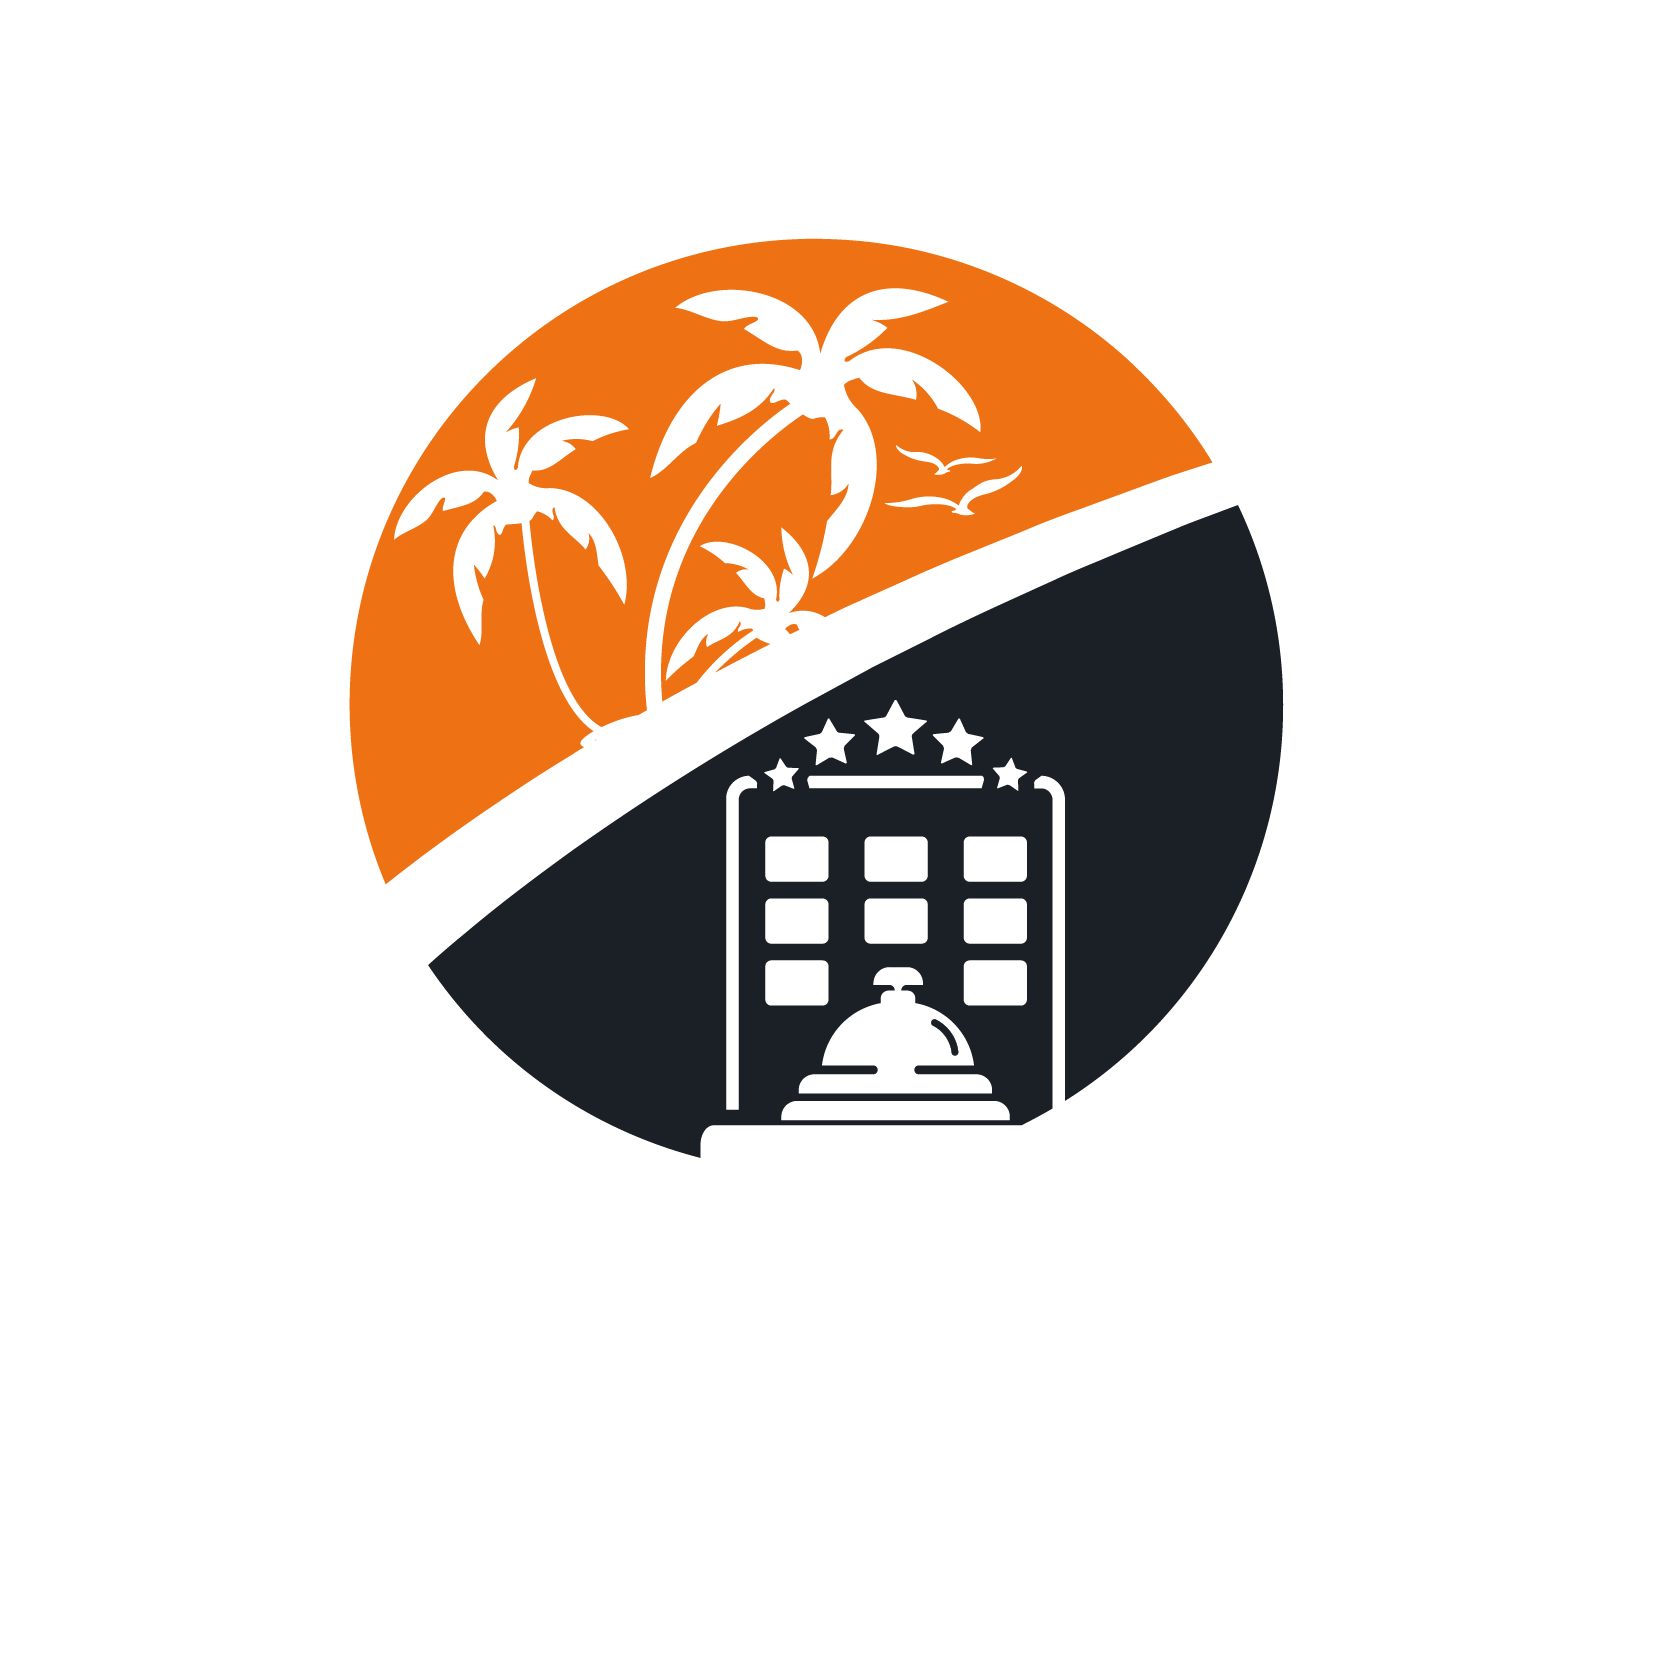 MYCOZY AGENCY - Votre conciergerie 3.0